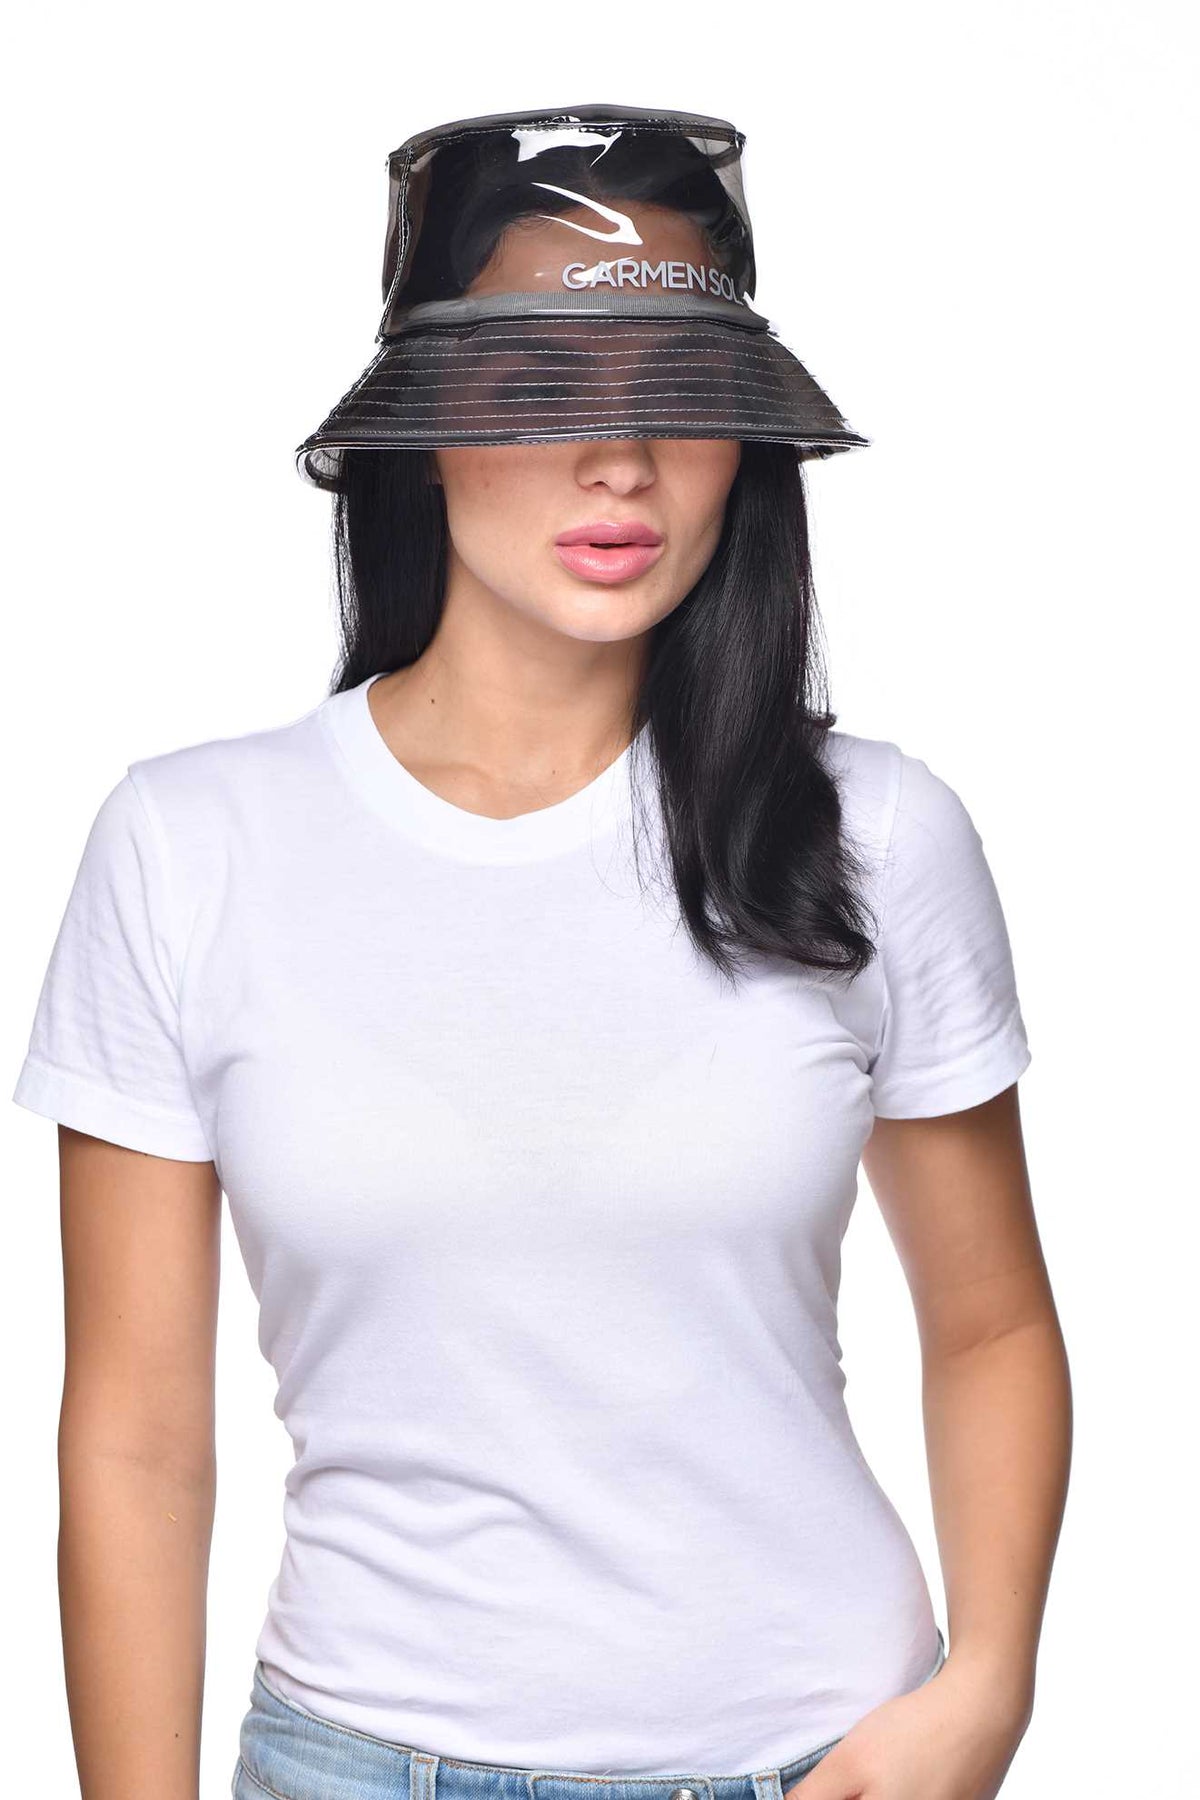 Waterproof Carmen Sol bucket hat outfit in color grey